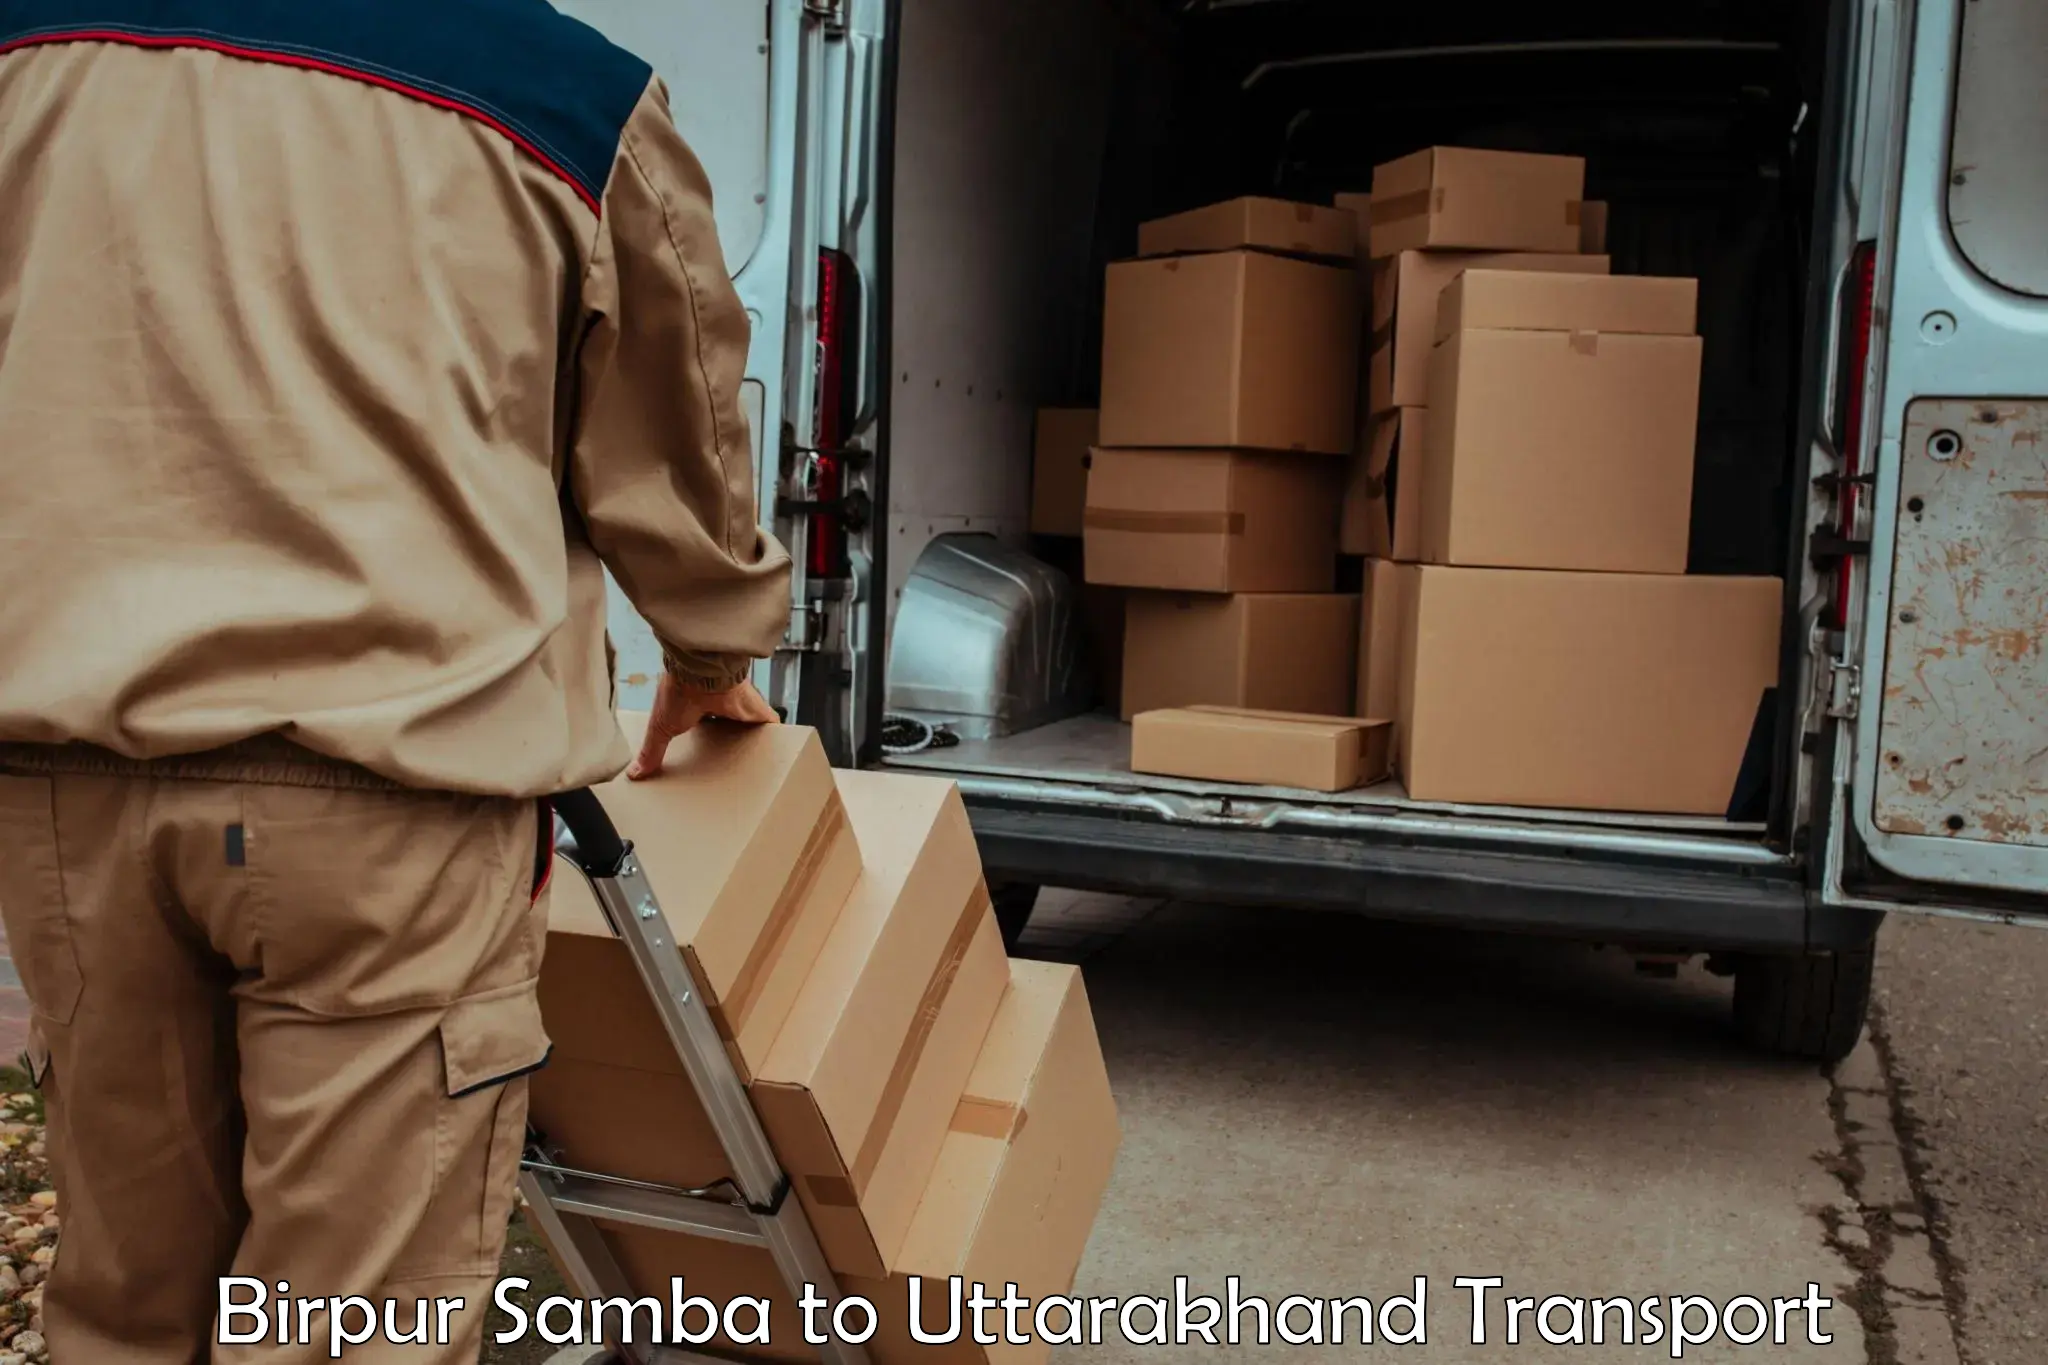 Truck transport companies in India Birpur Samba to Champawat